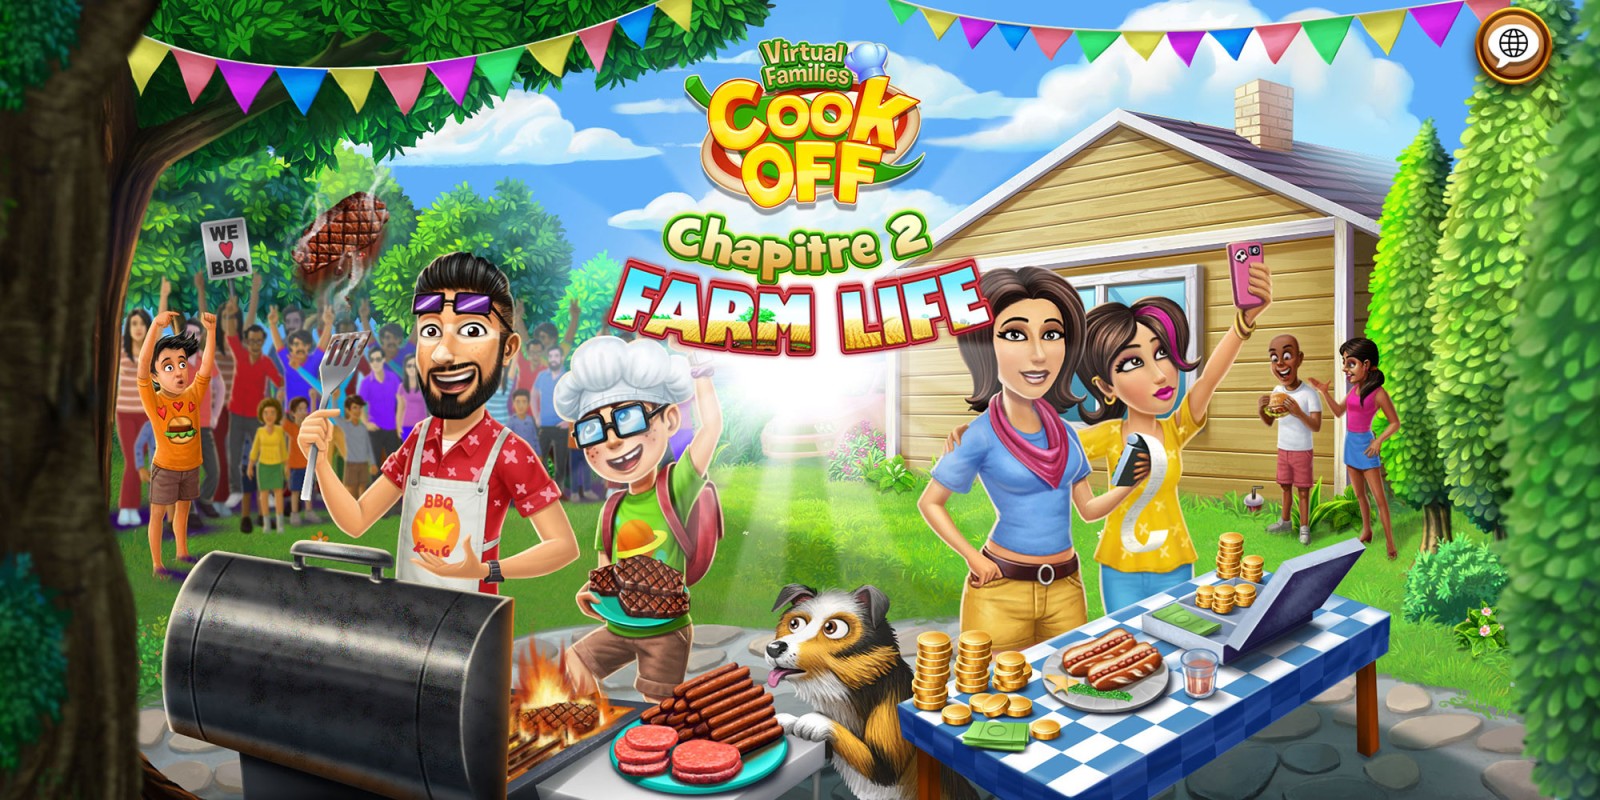 Virtual Families Cook Off: Chapitre 2 Farm Life